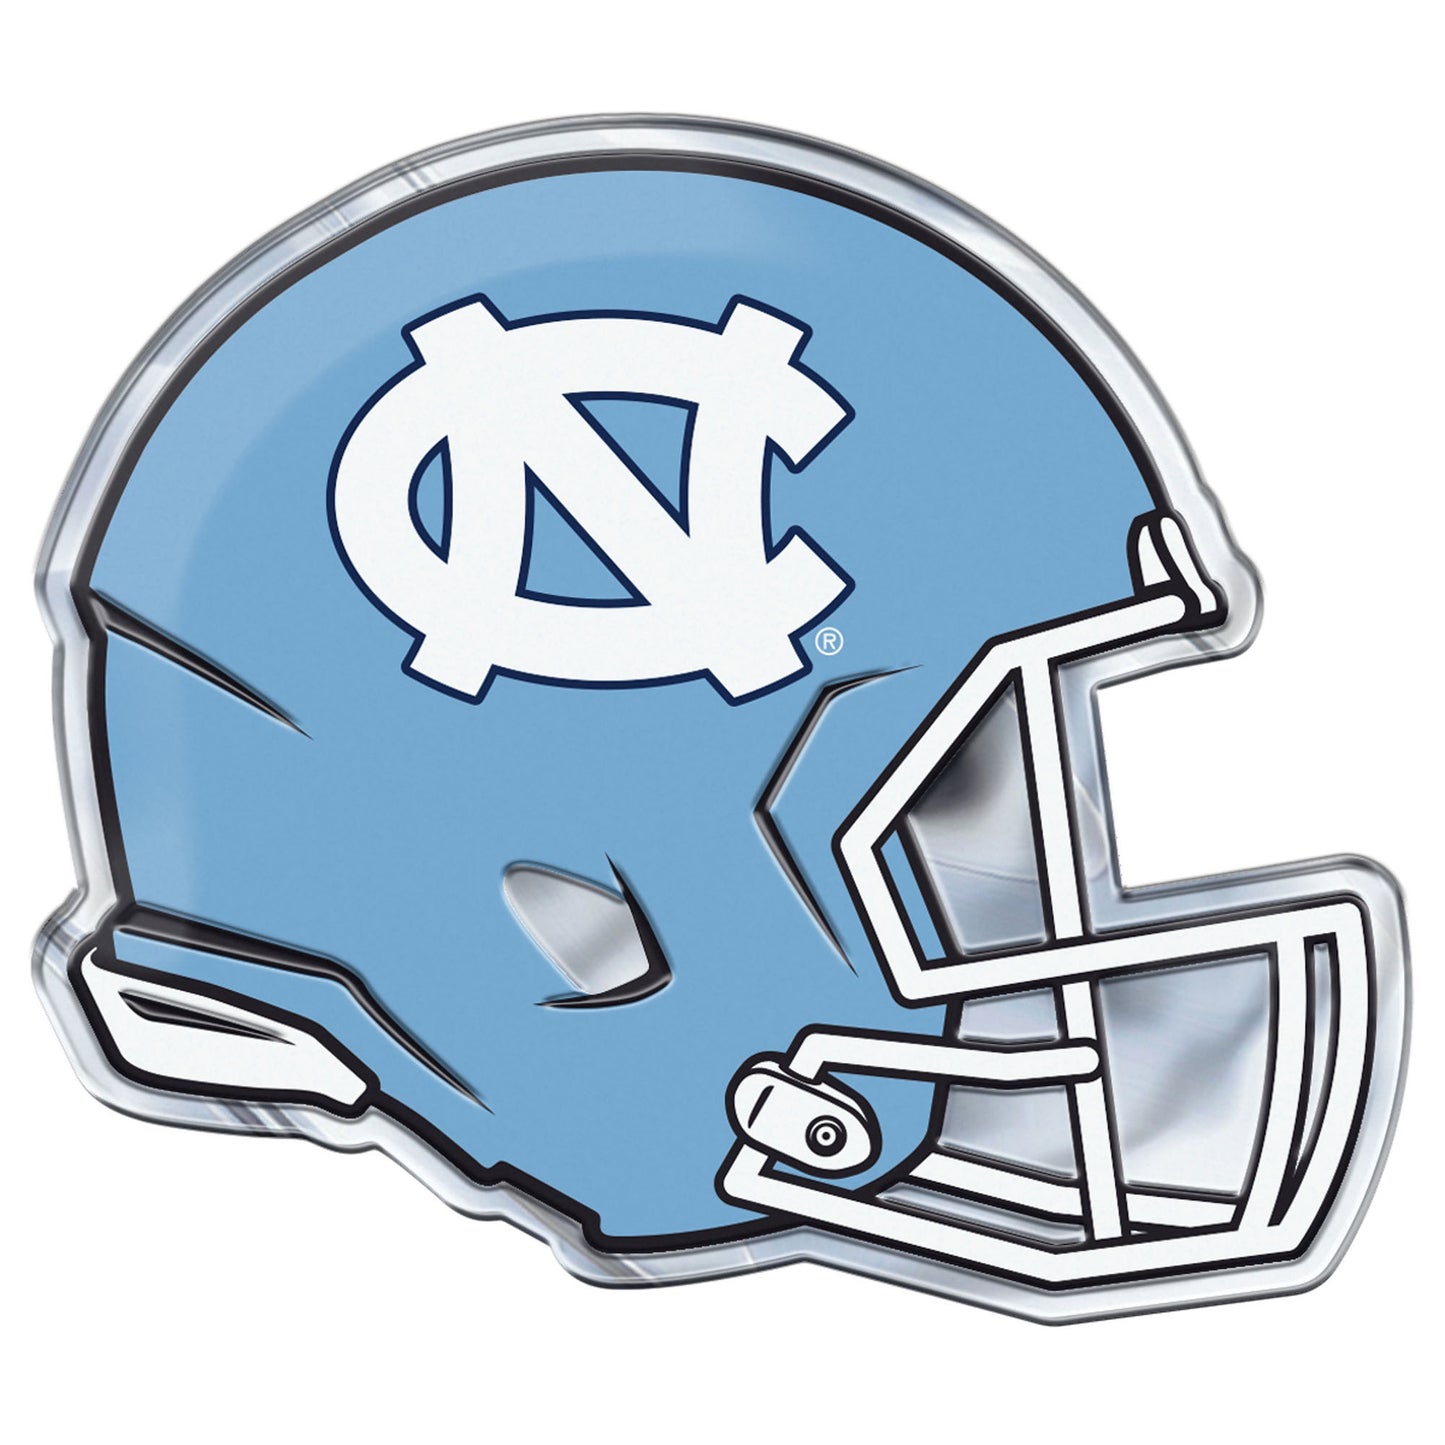 North Carolina Tar Heels Embossed Helmet Emblem with NC Logo by Fanmats